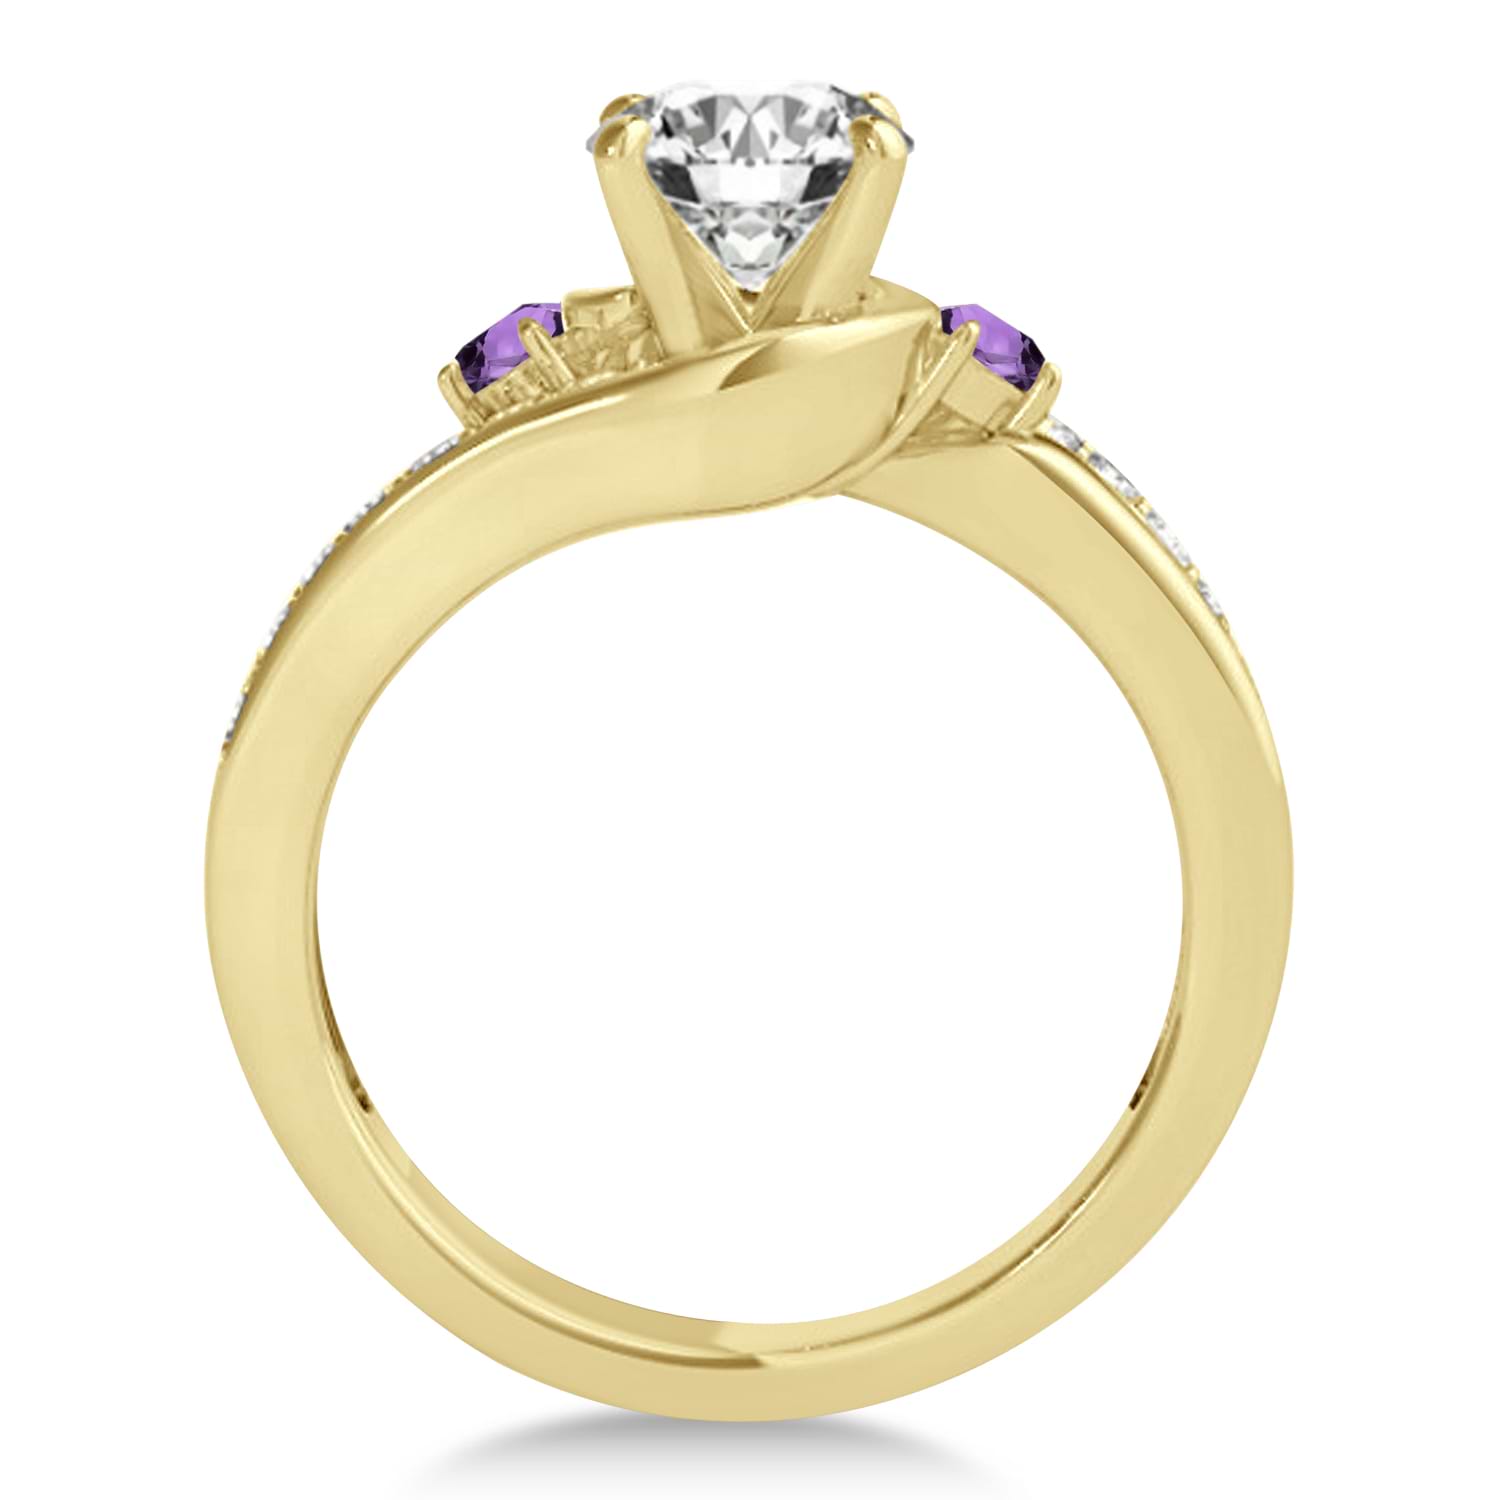 Swirl Design Amethyst & Diamond Engagement Ring Setting 18k Yellow Gold 0.38ct